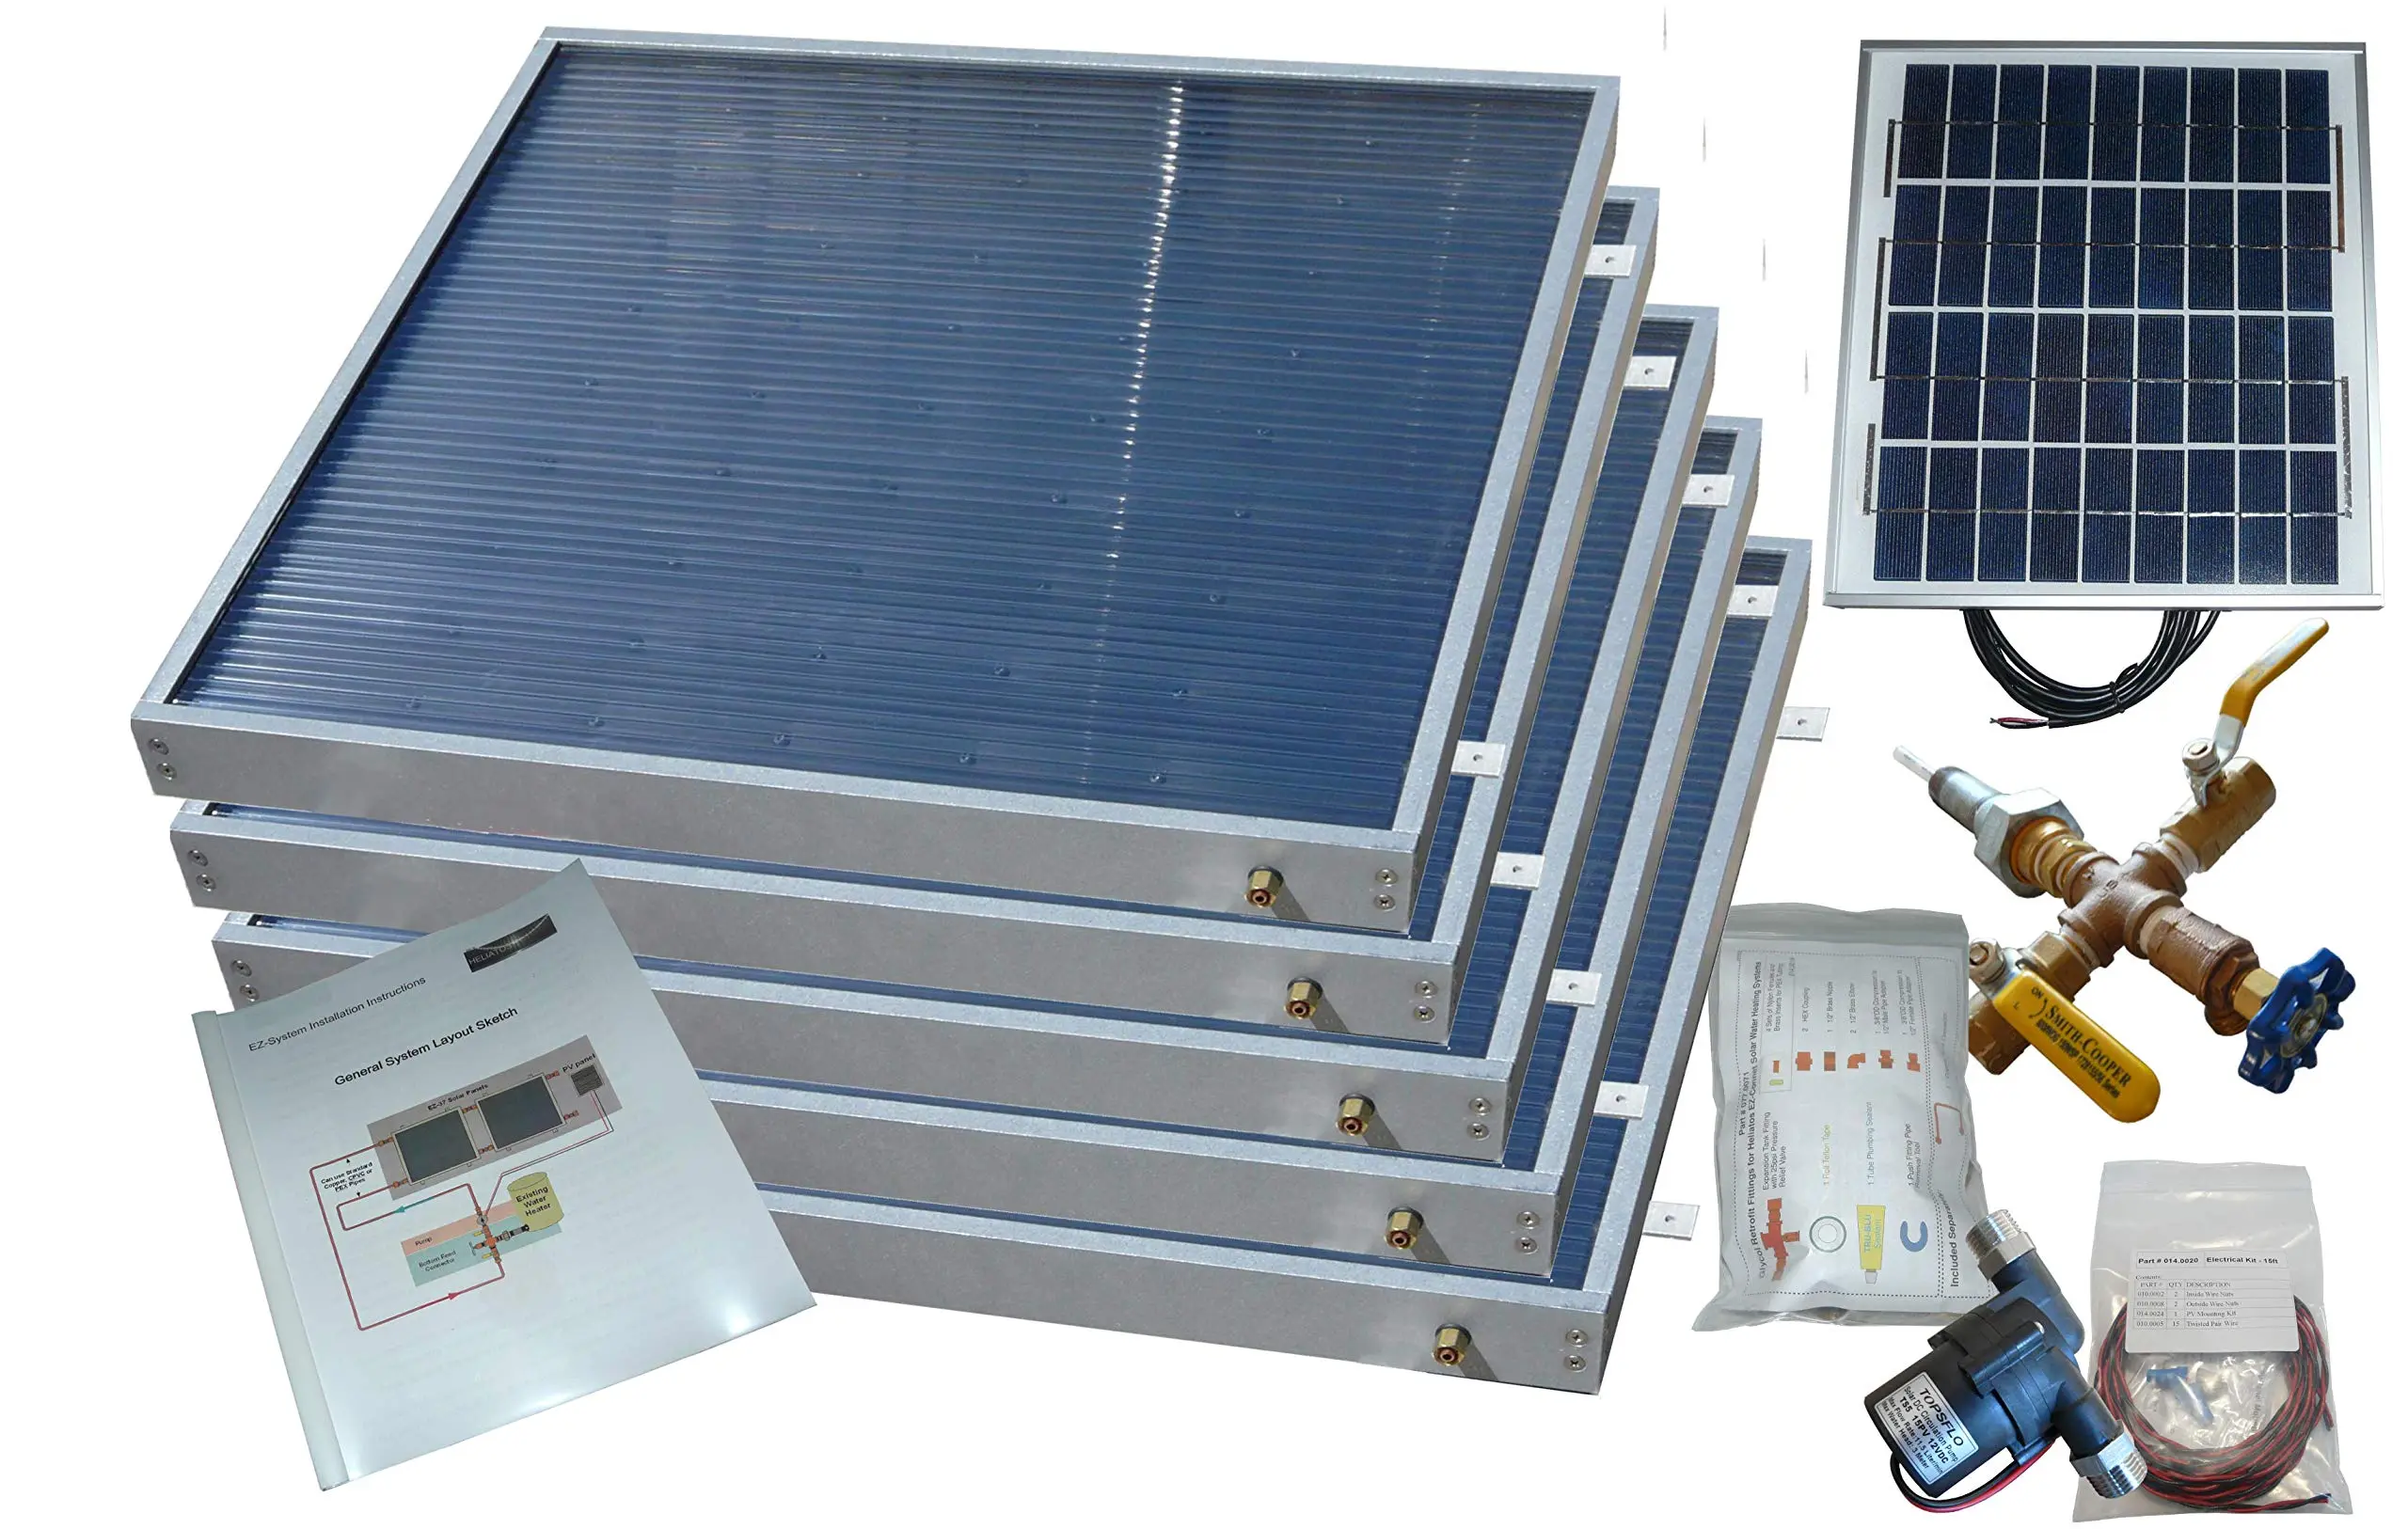 ez 37 solar water heater panel by heliatos - Do solar water heaters work in winter